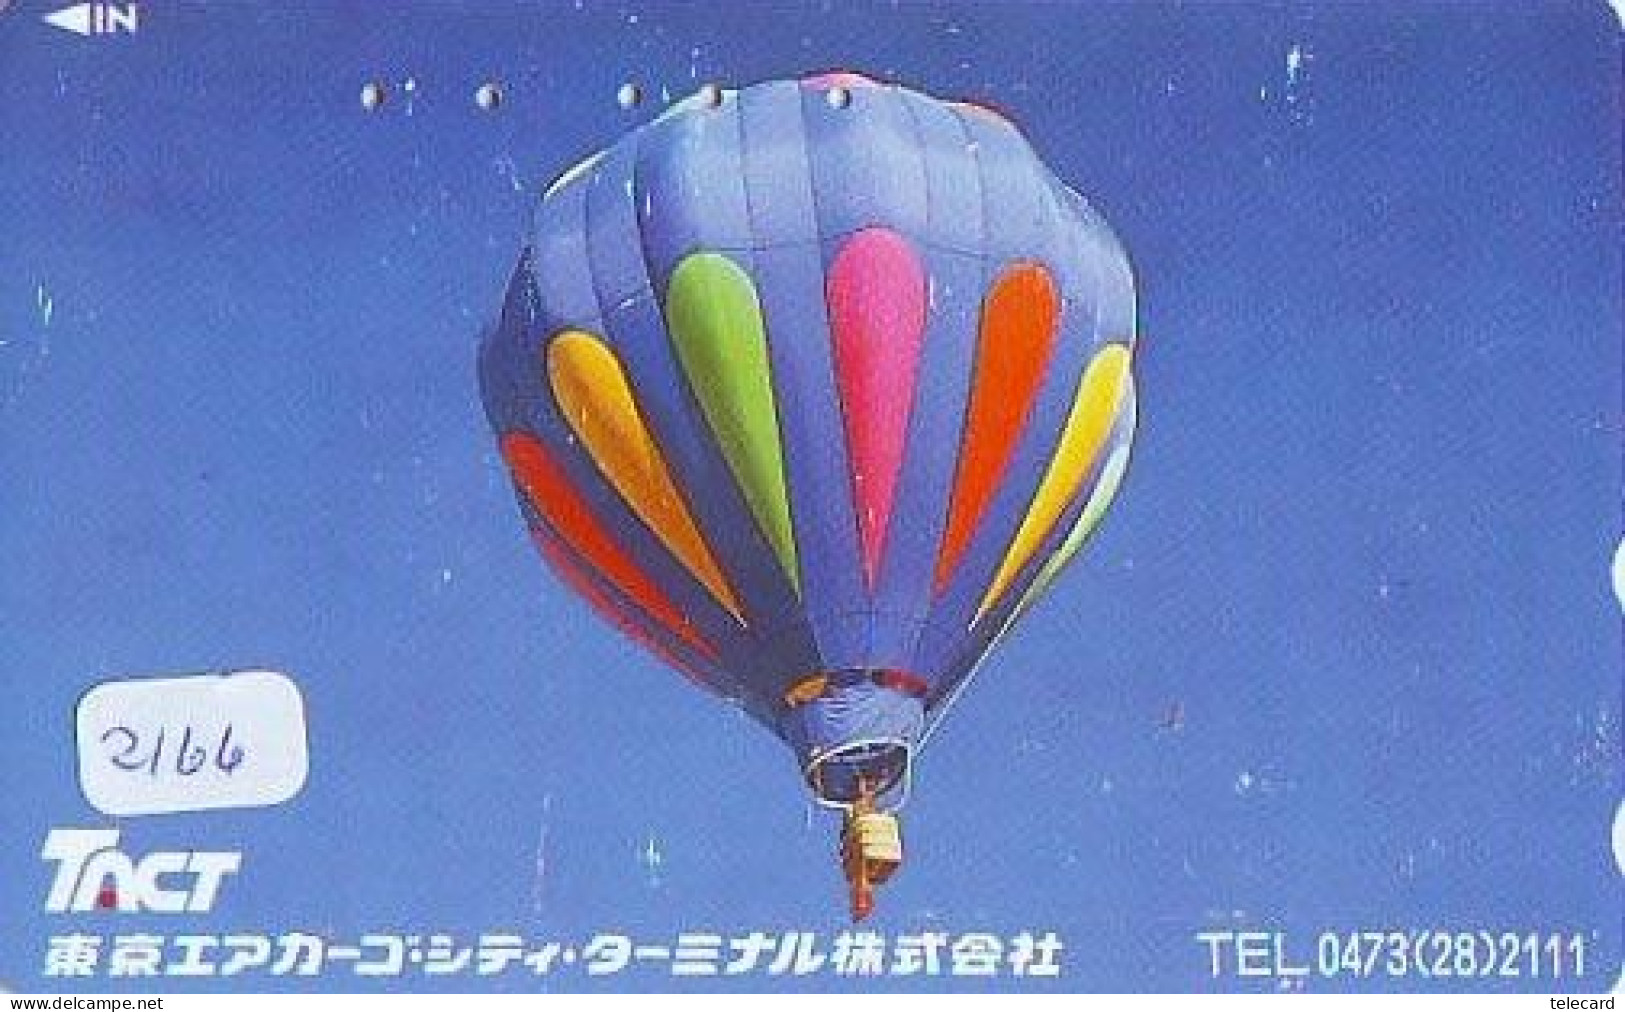 Telecarte JAPON * (2166) BALLON * MONTGOLFIERE - Hot Air Balloon * Aerostato * Heißluft PHONECARD JAPAN - - Deportes